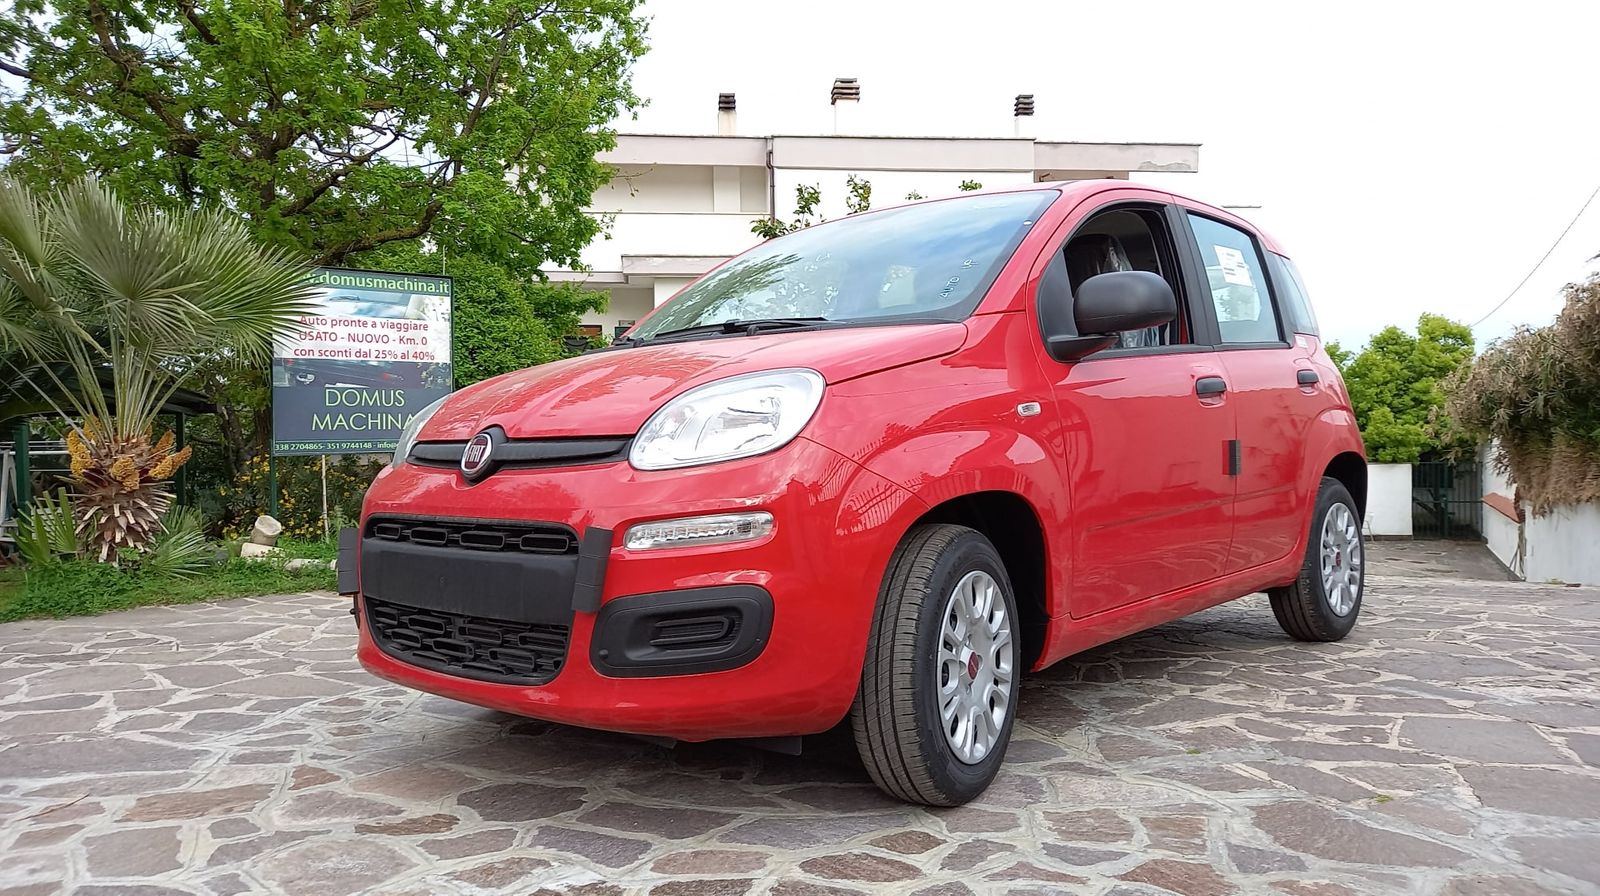 Fiat Panda 1.2 69cv, km. 0, nuova, nazionale